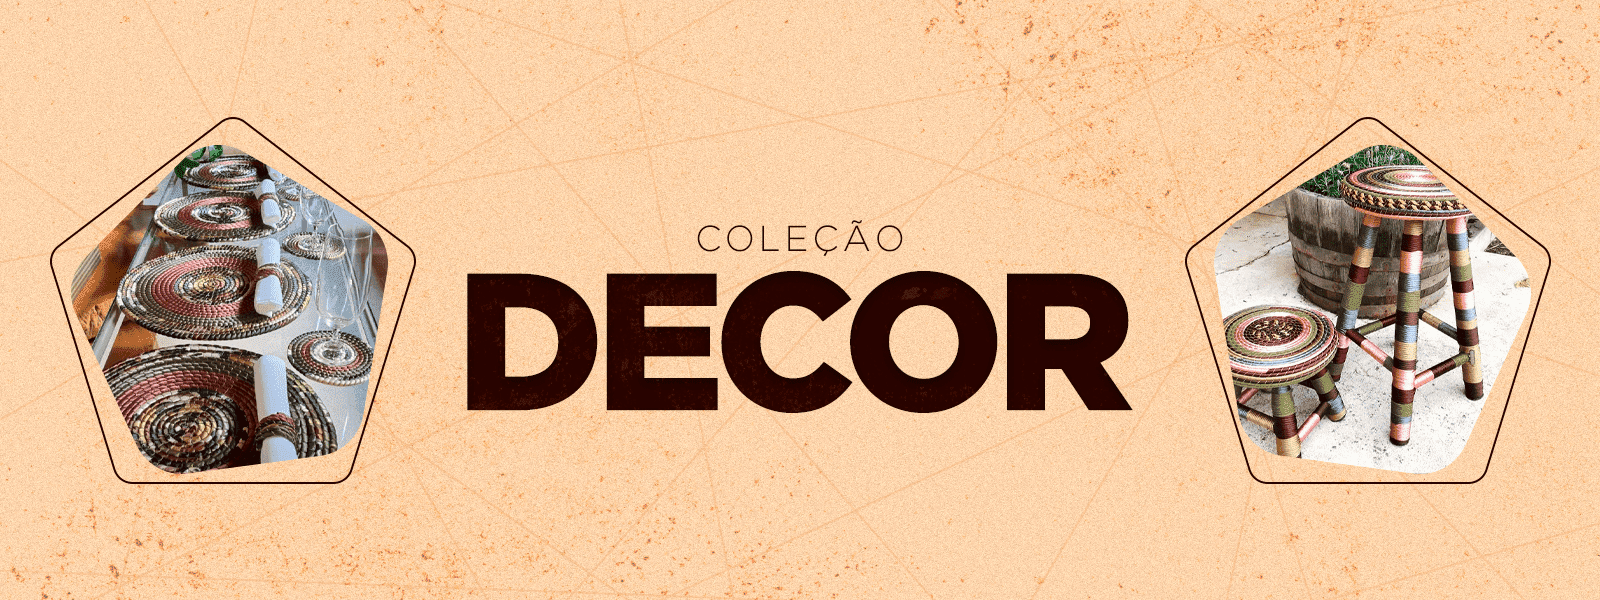 colecaodecor-1600x600-min